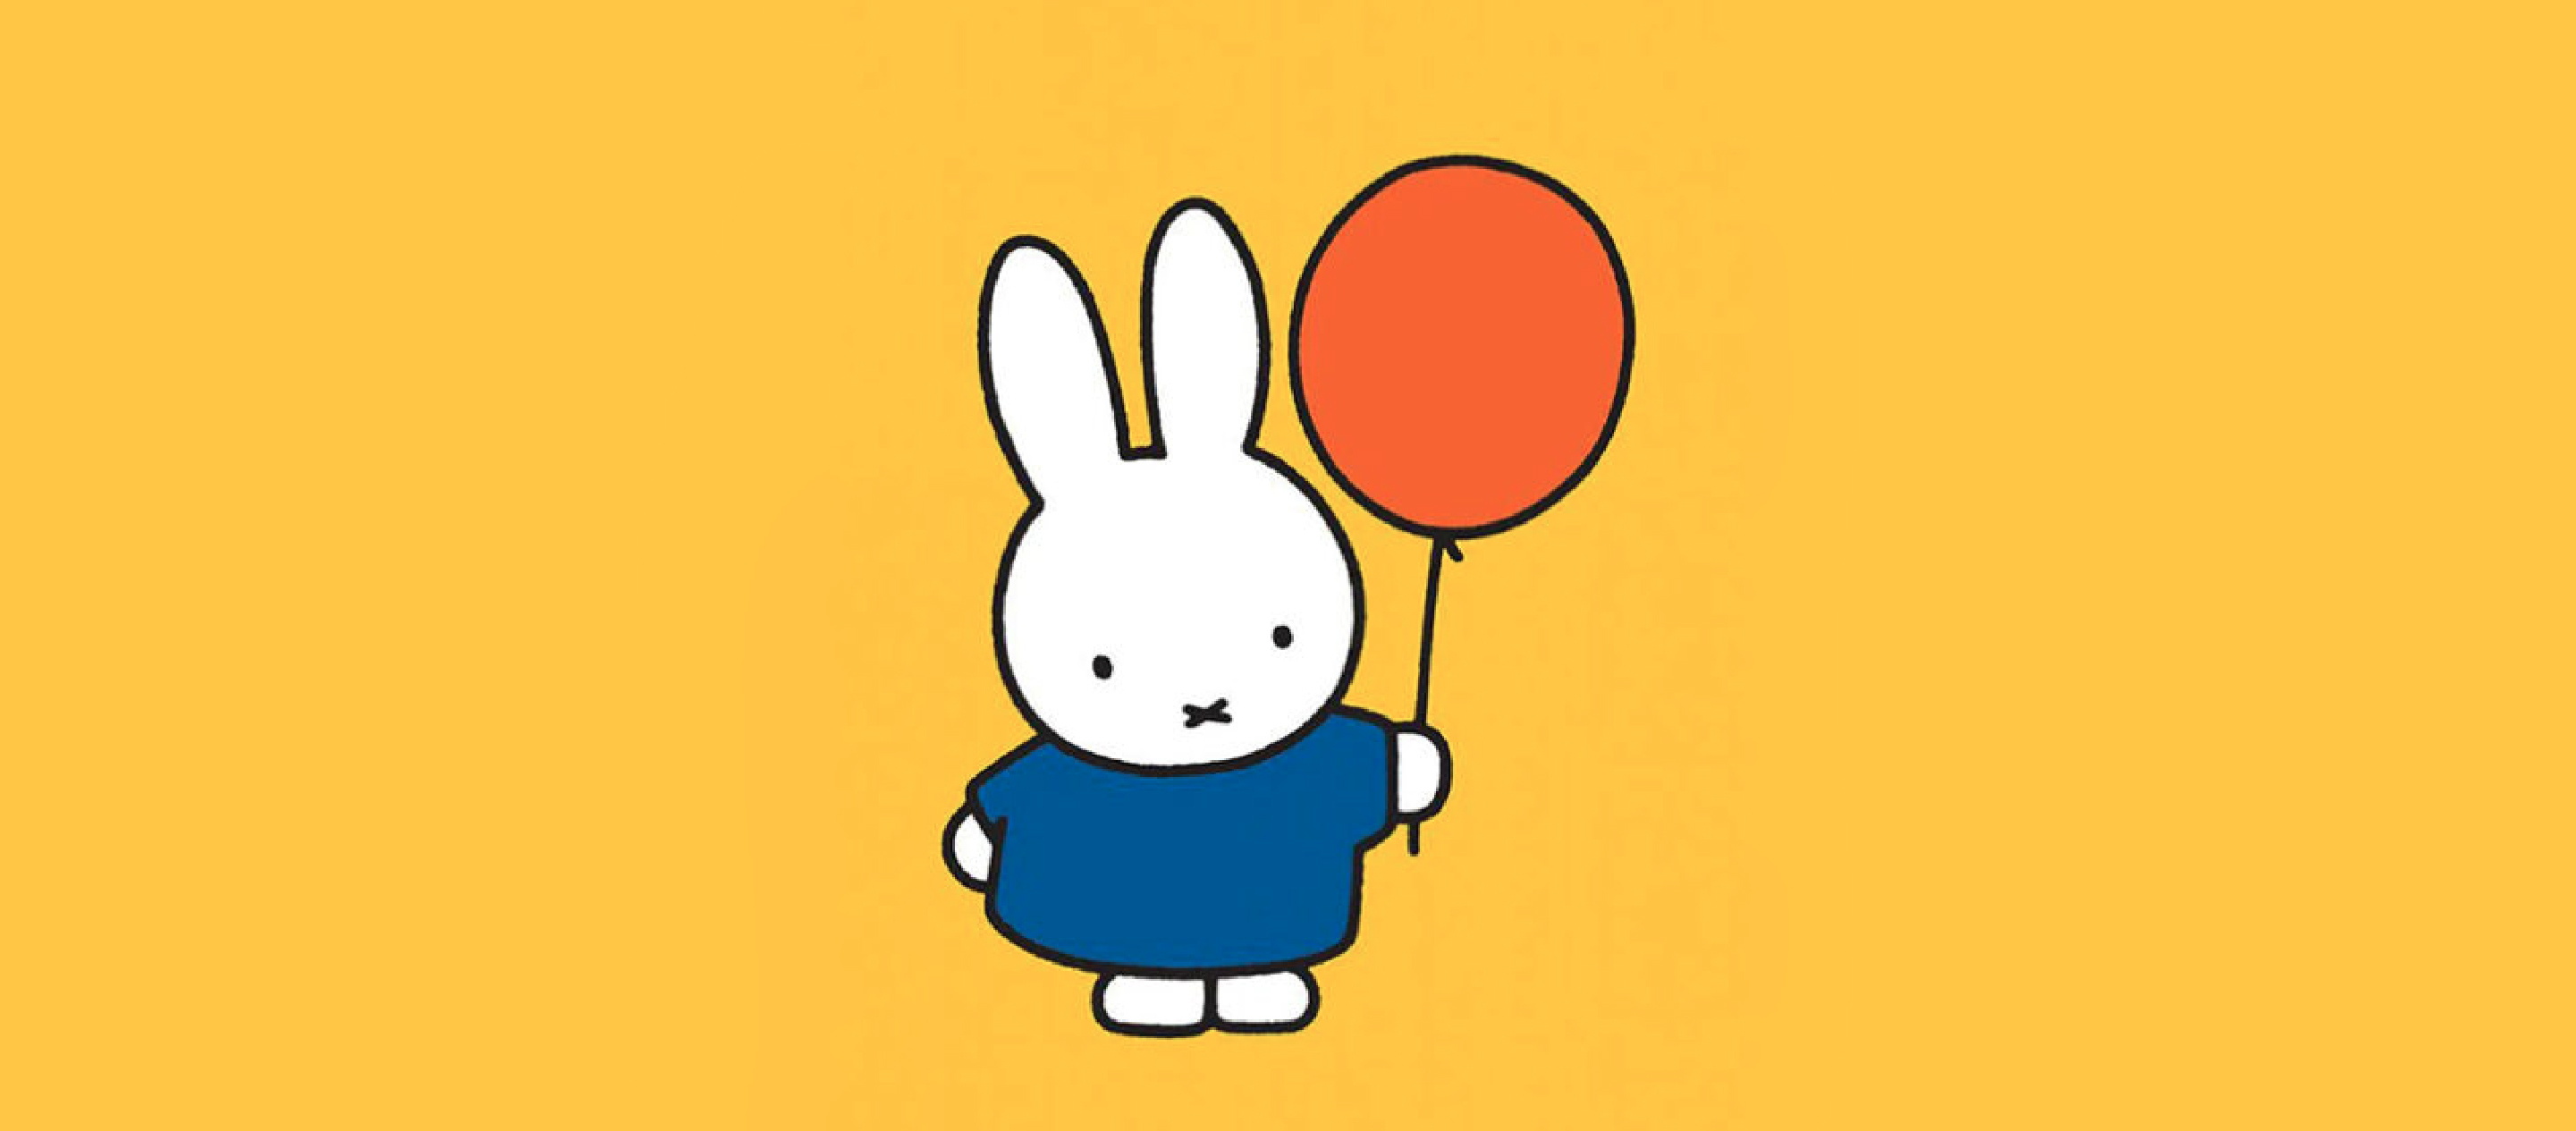 Miffy กระต่ายน้อยในโลกนิทานเด็ก หนึ่งในต้นแบบหนังสือสร้างแรงบันดาลใจให้เด็กทุกวันนี้